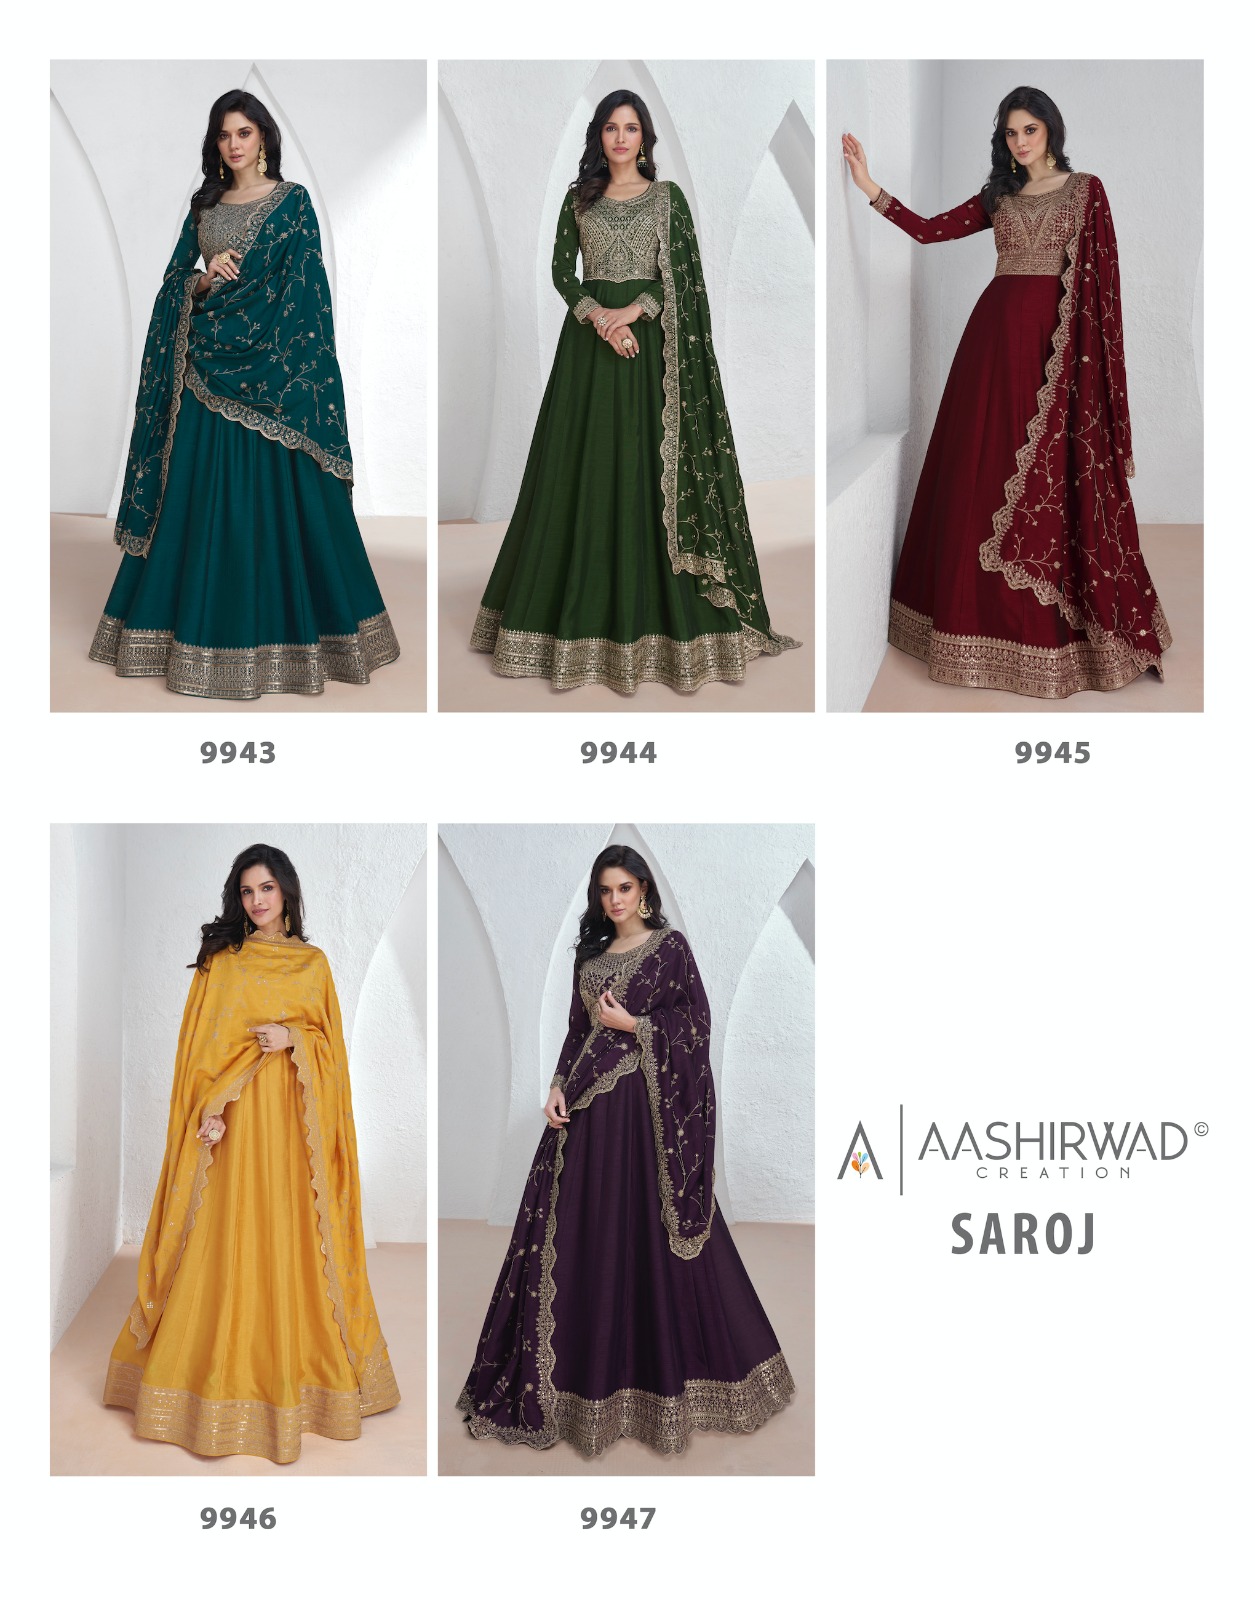 Aashirwad Saroj collection 3